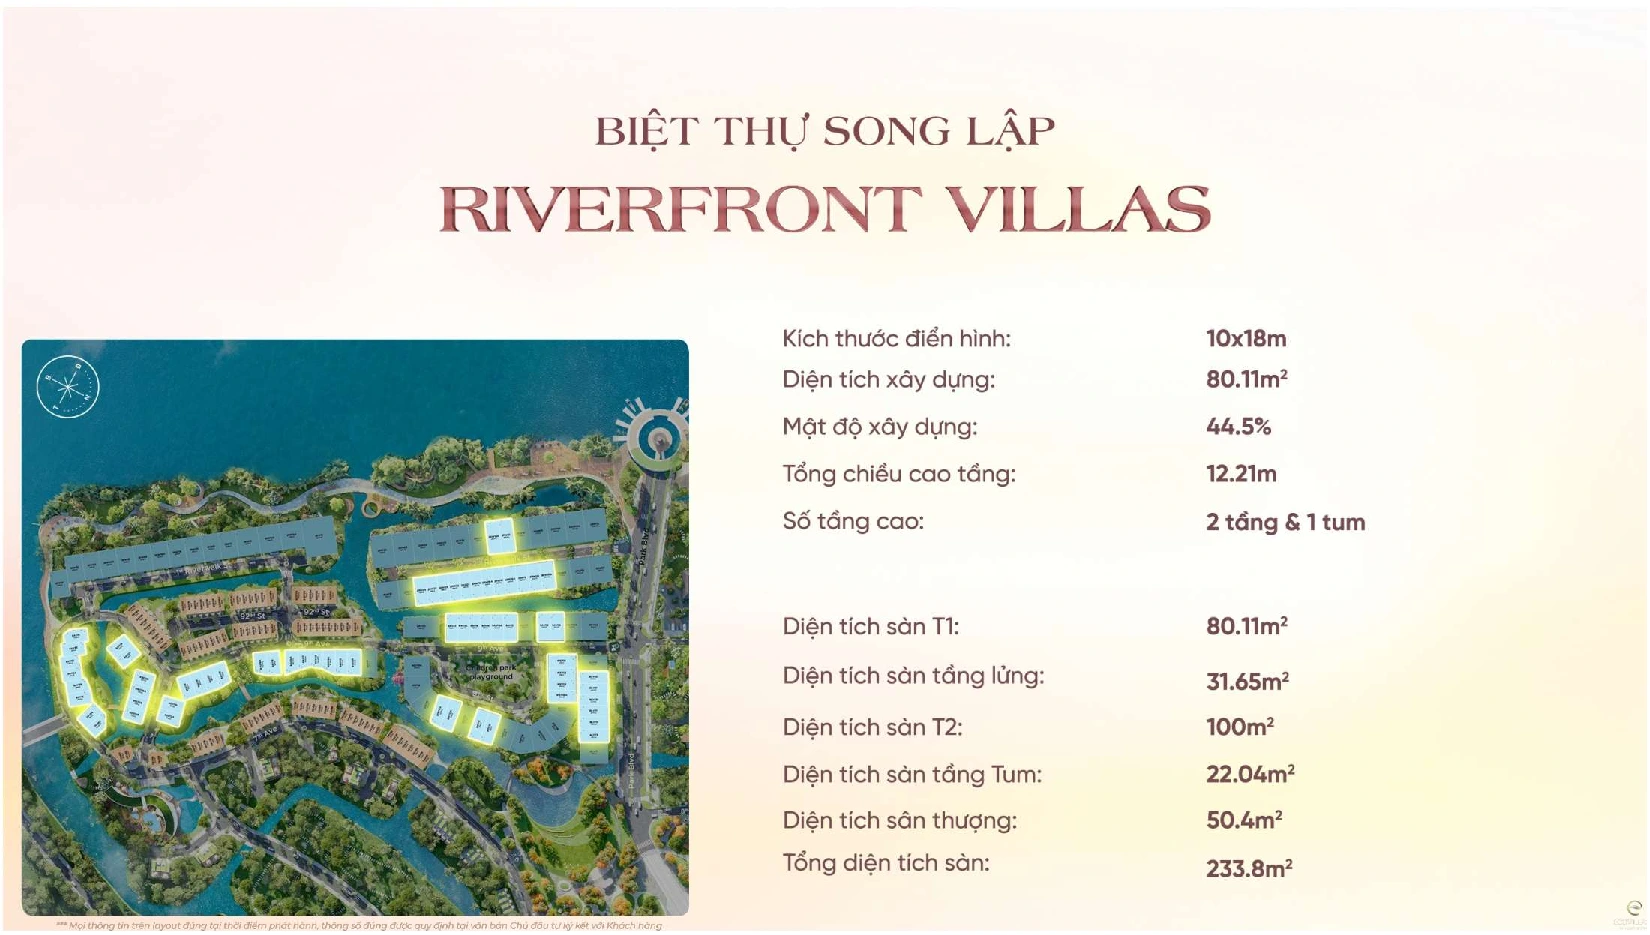 thông số kỹ thuật riverfront villas song lập eco village saigon river 1